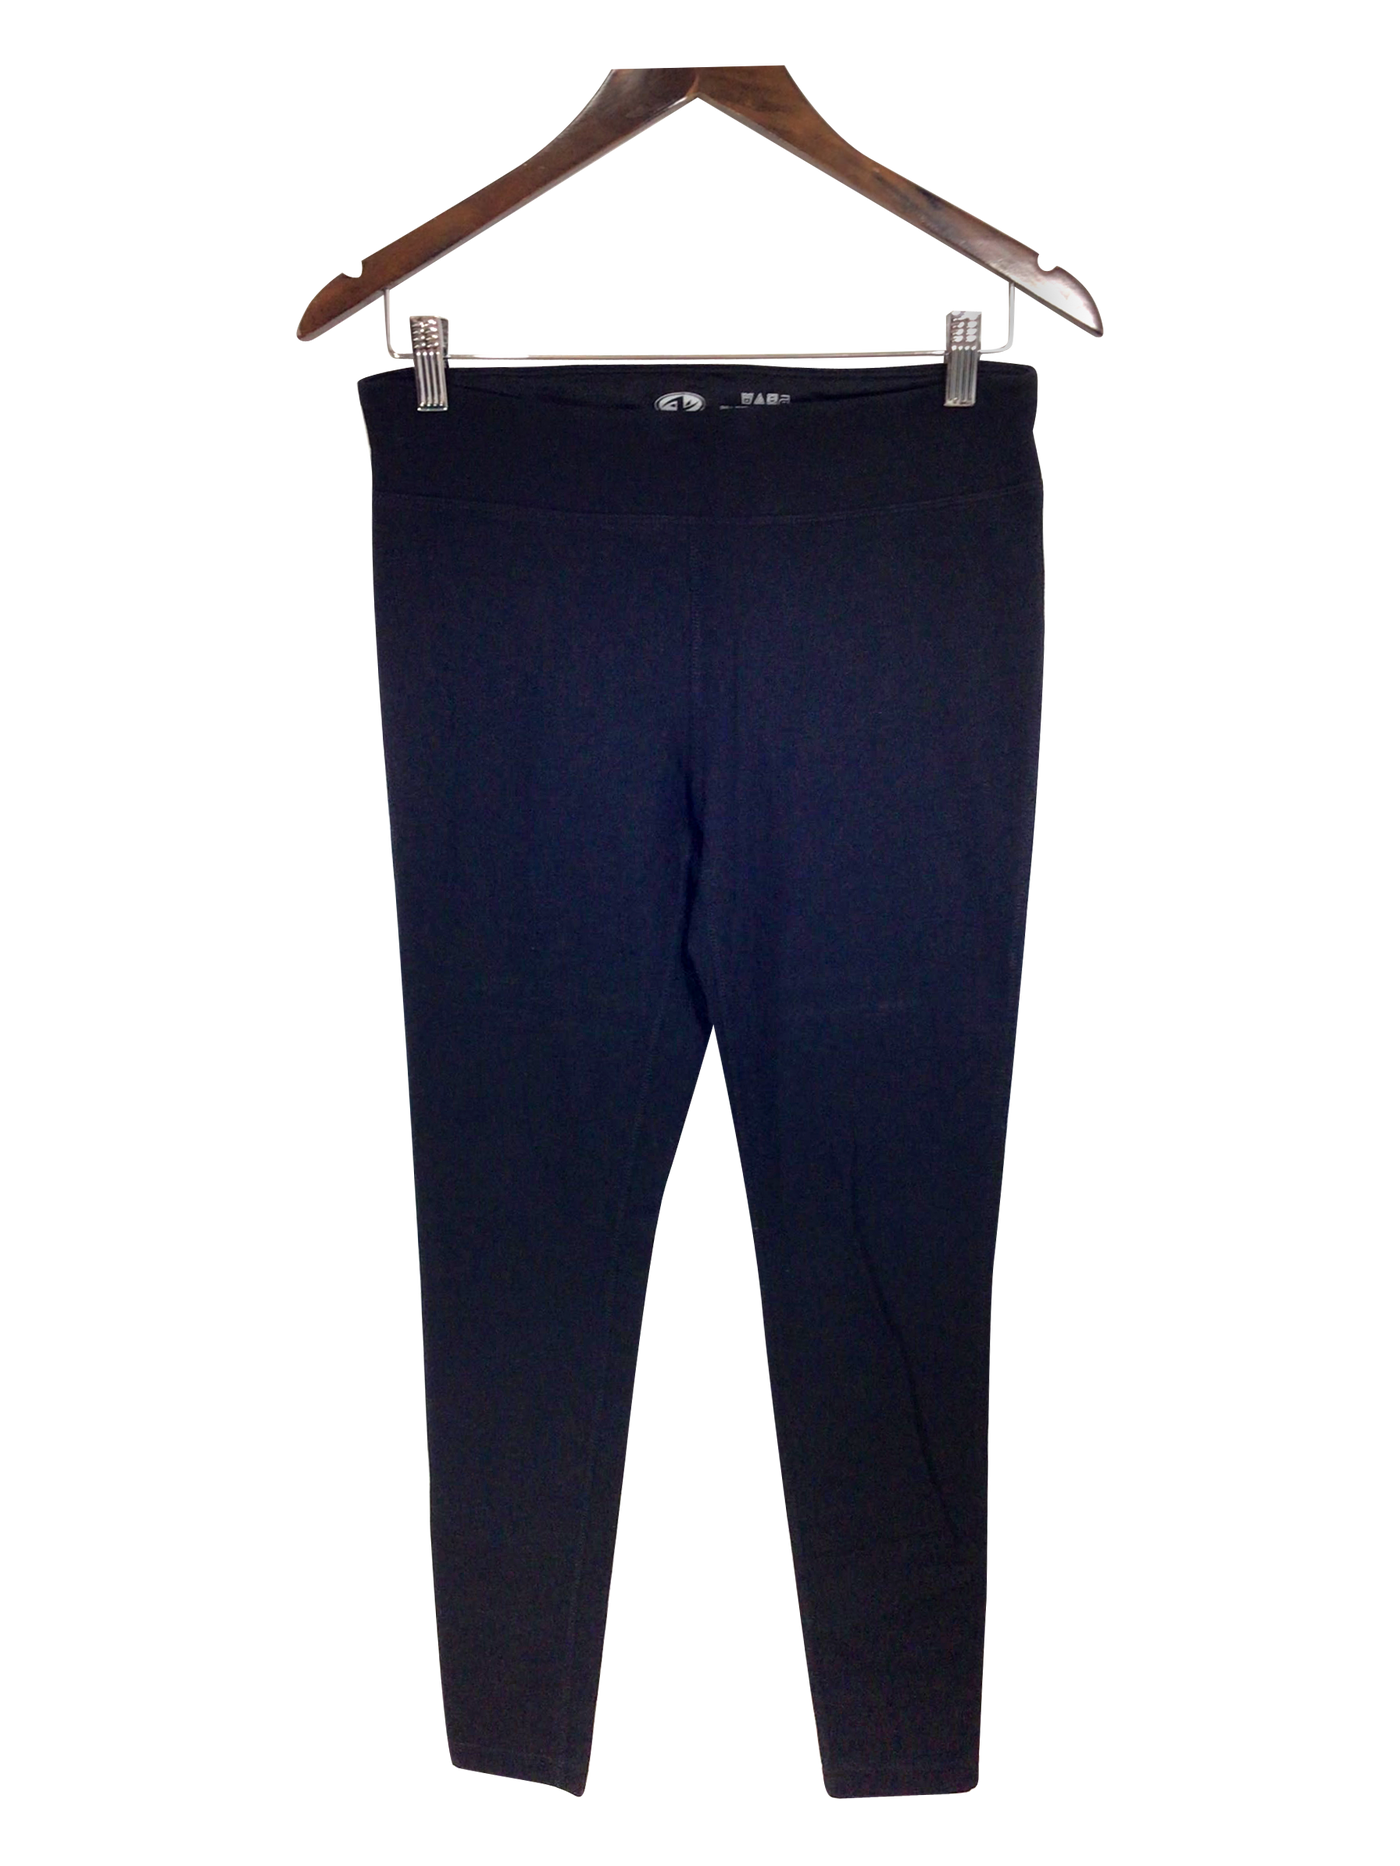 ATHLETIC WORKS Regular fit Activewear Legging in Black - Size M | 12.29 $ KOOP